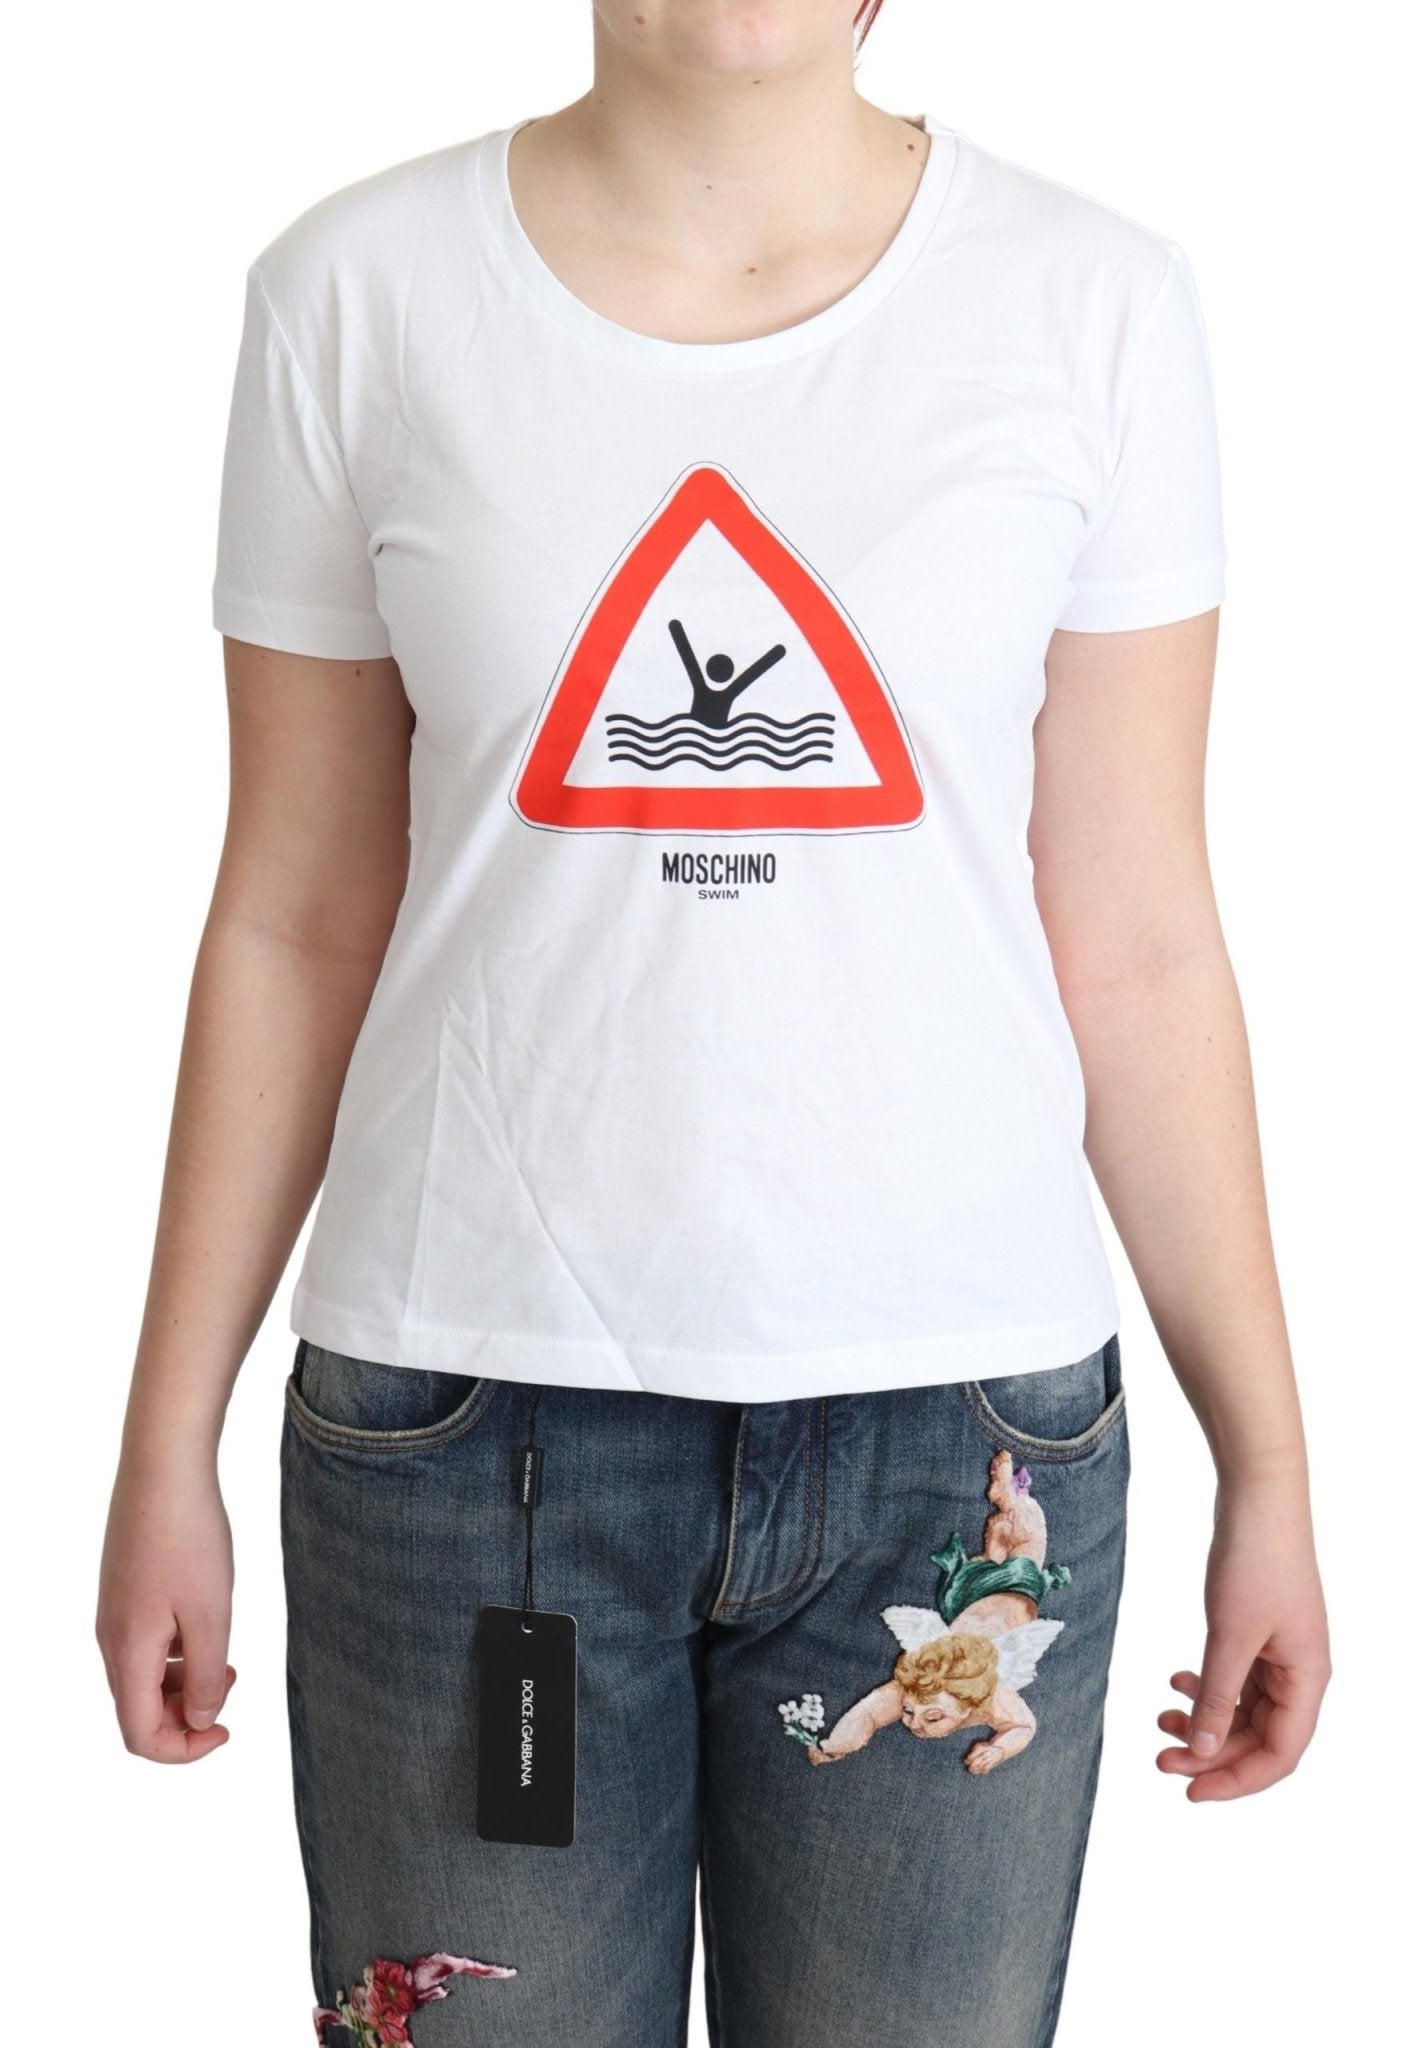 Moschino White Cotton Graphic Triangle Print T-shirt - Fizigo